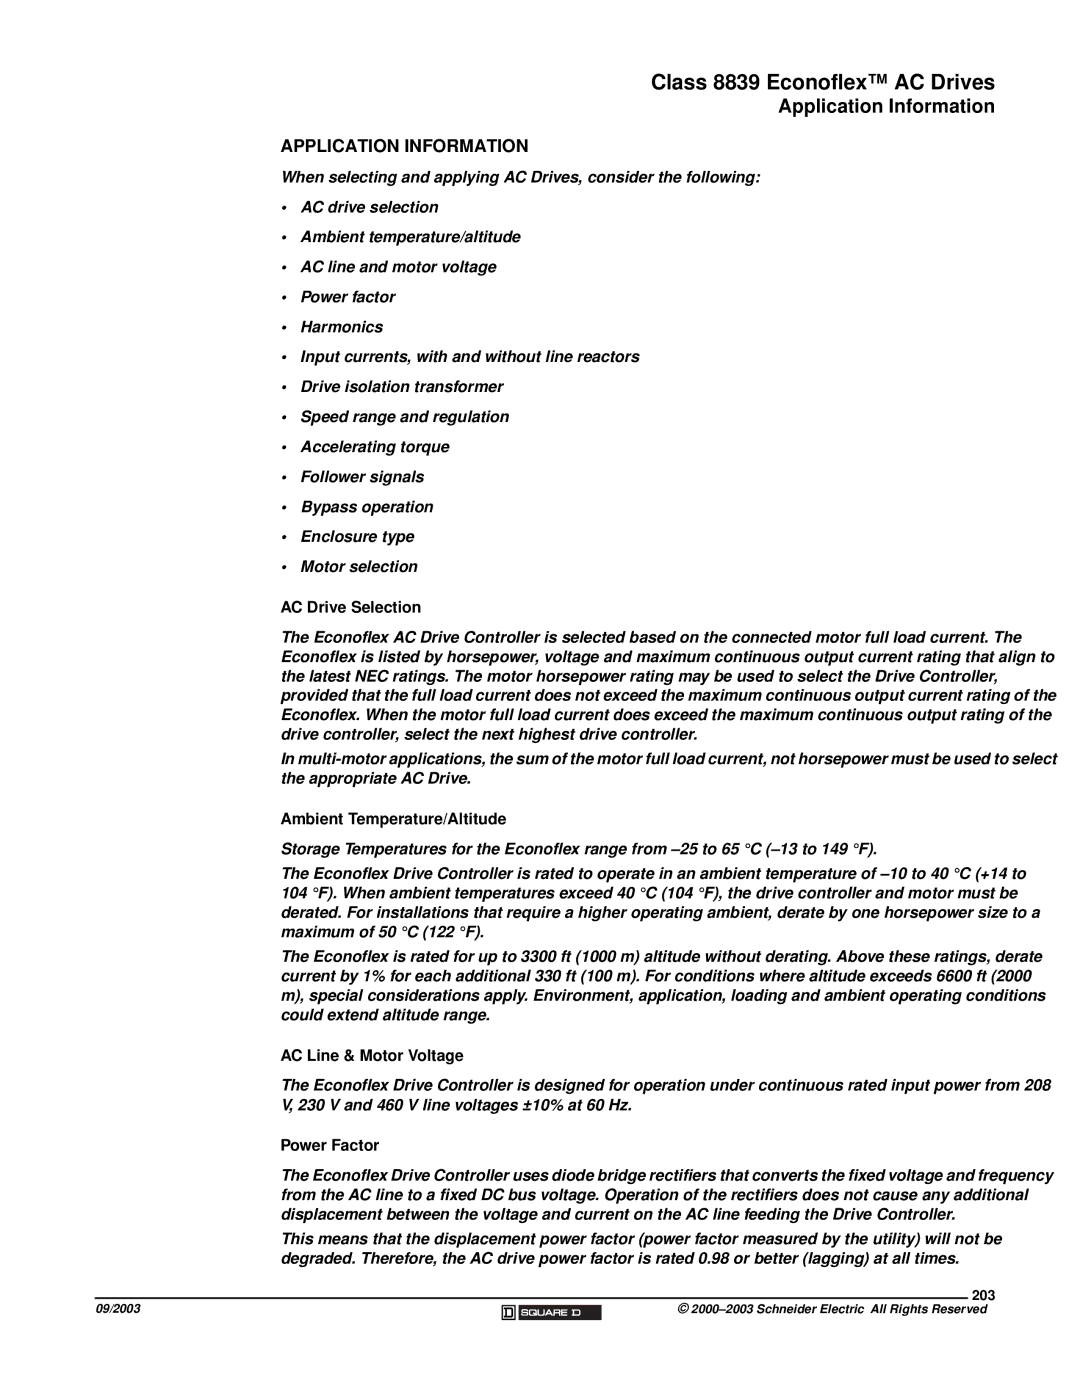 Schneider Electric 58 TRX manual Application Information, 203 